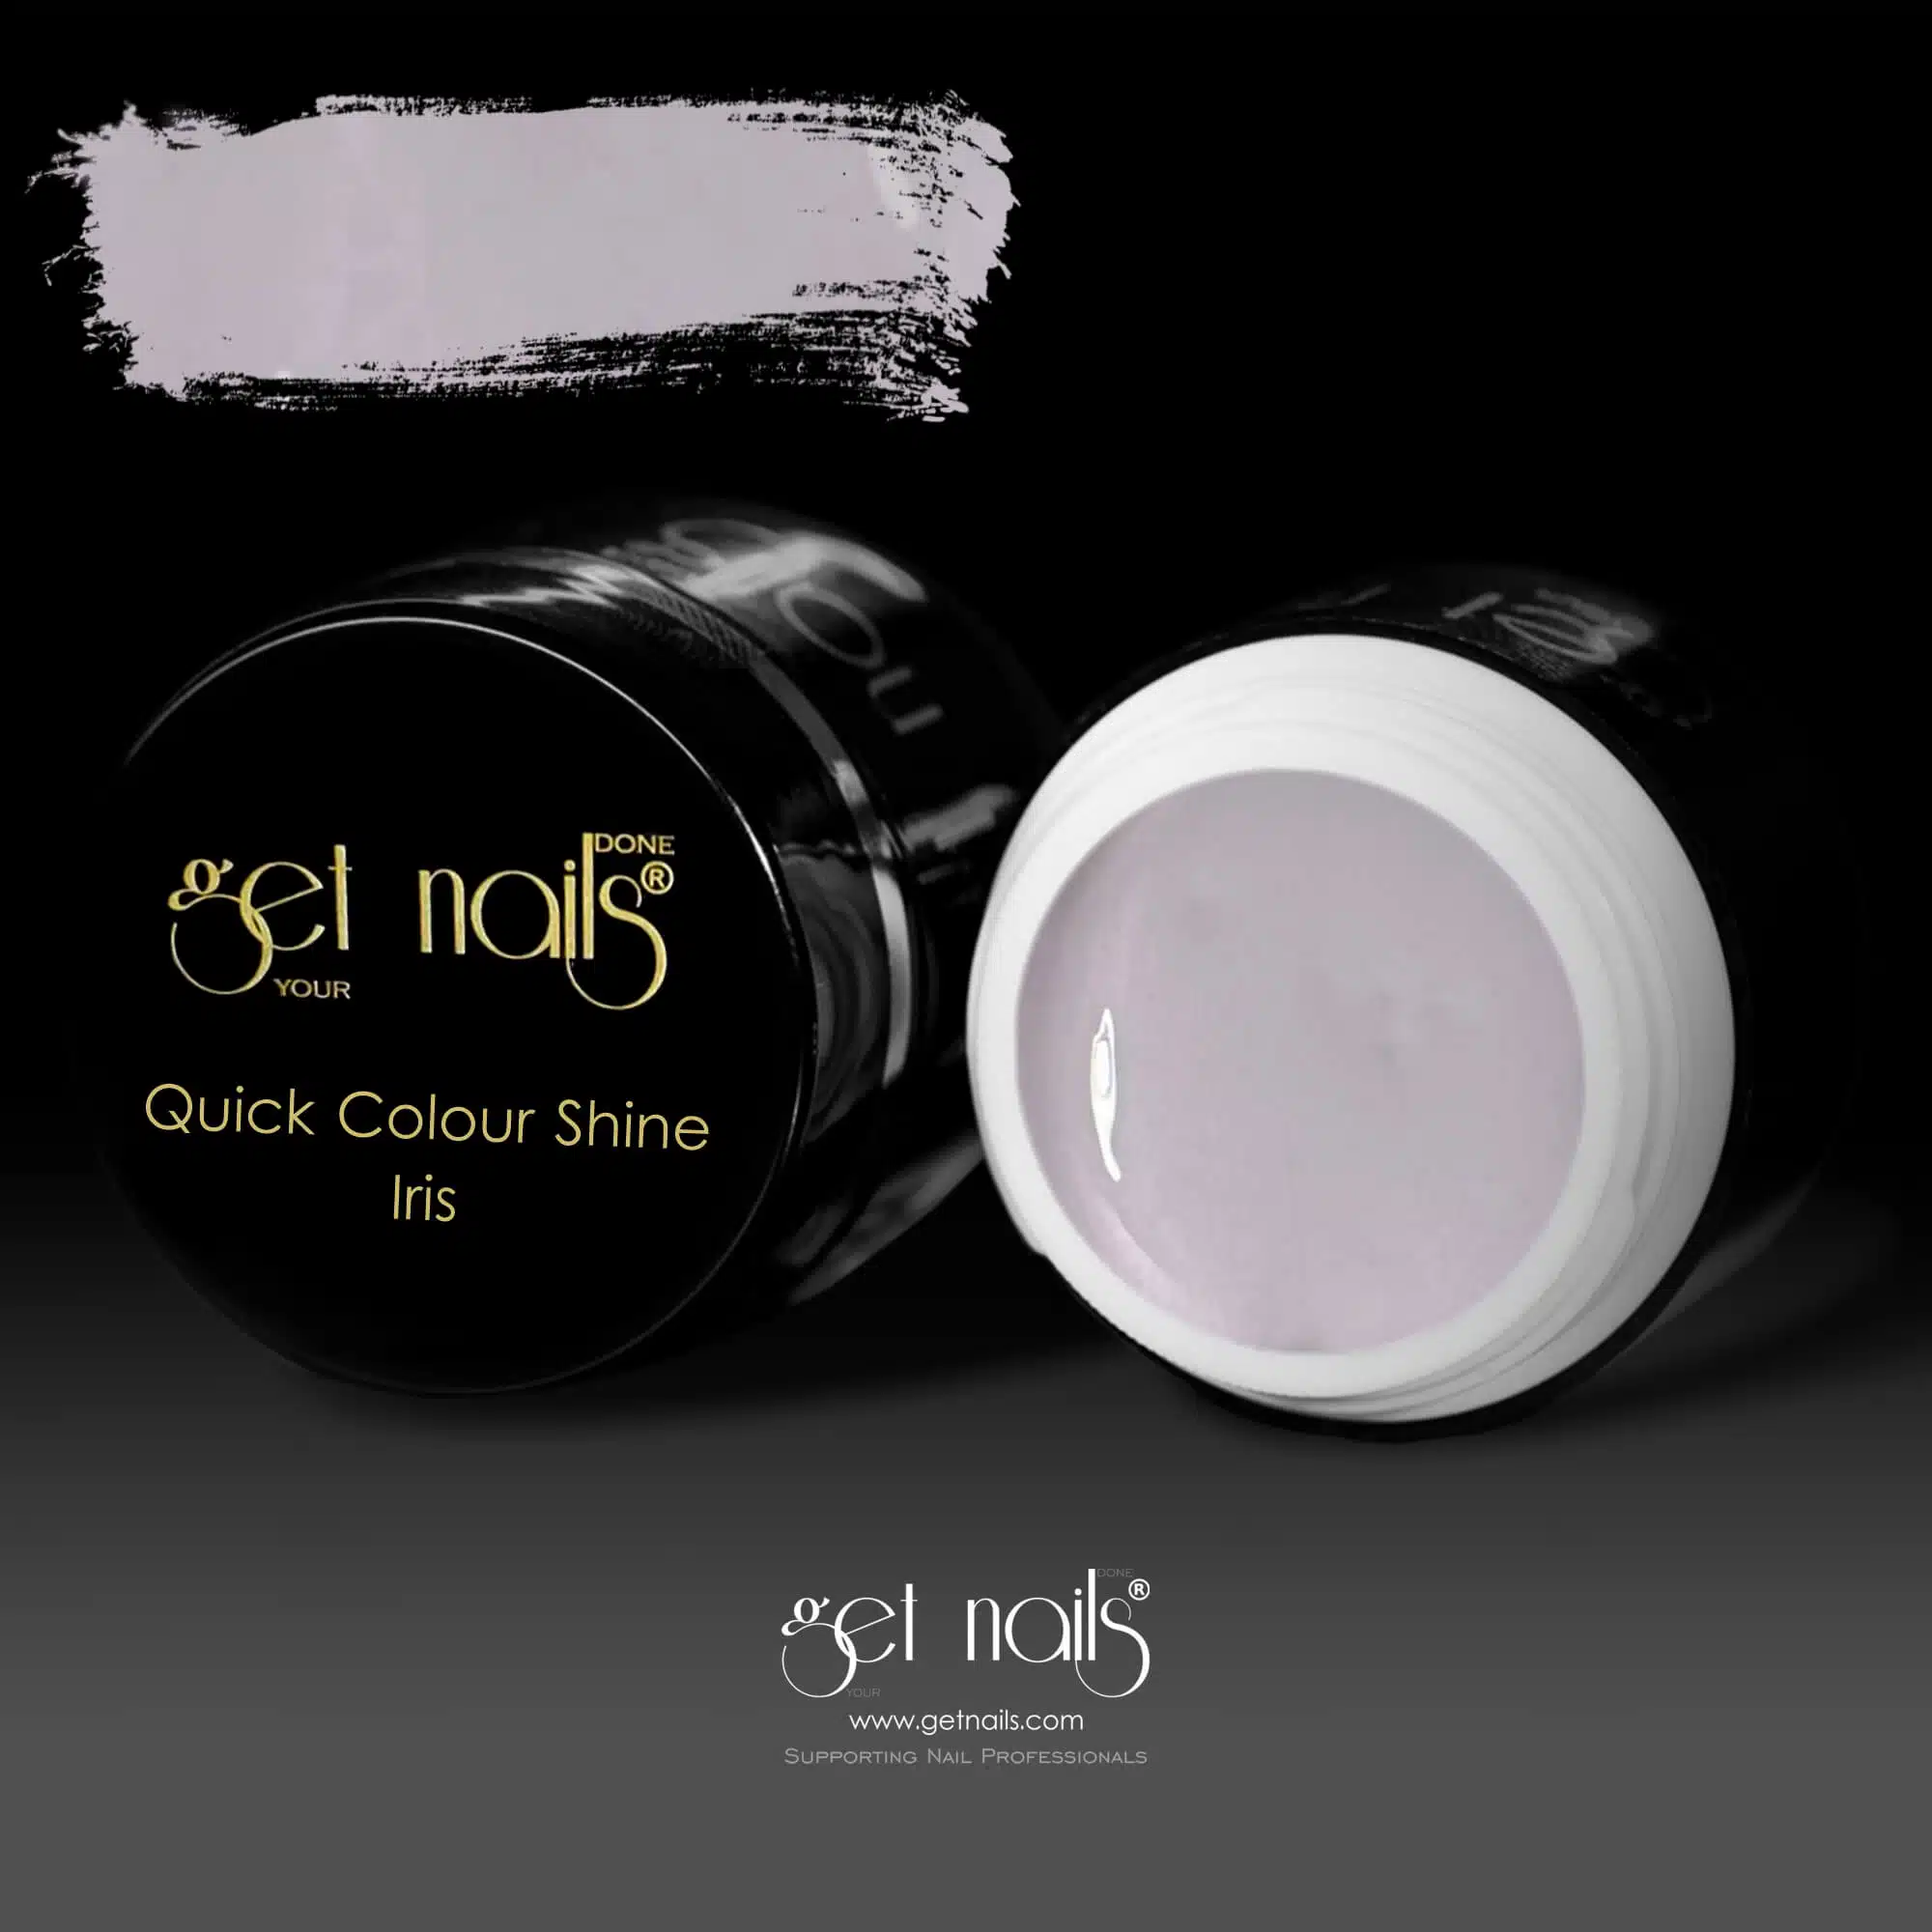 Get Nails Austria - Цветной гель Quick Color Shine Iris 5g